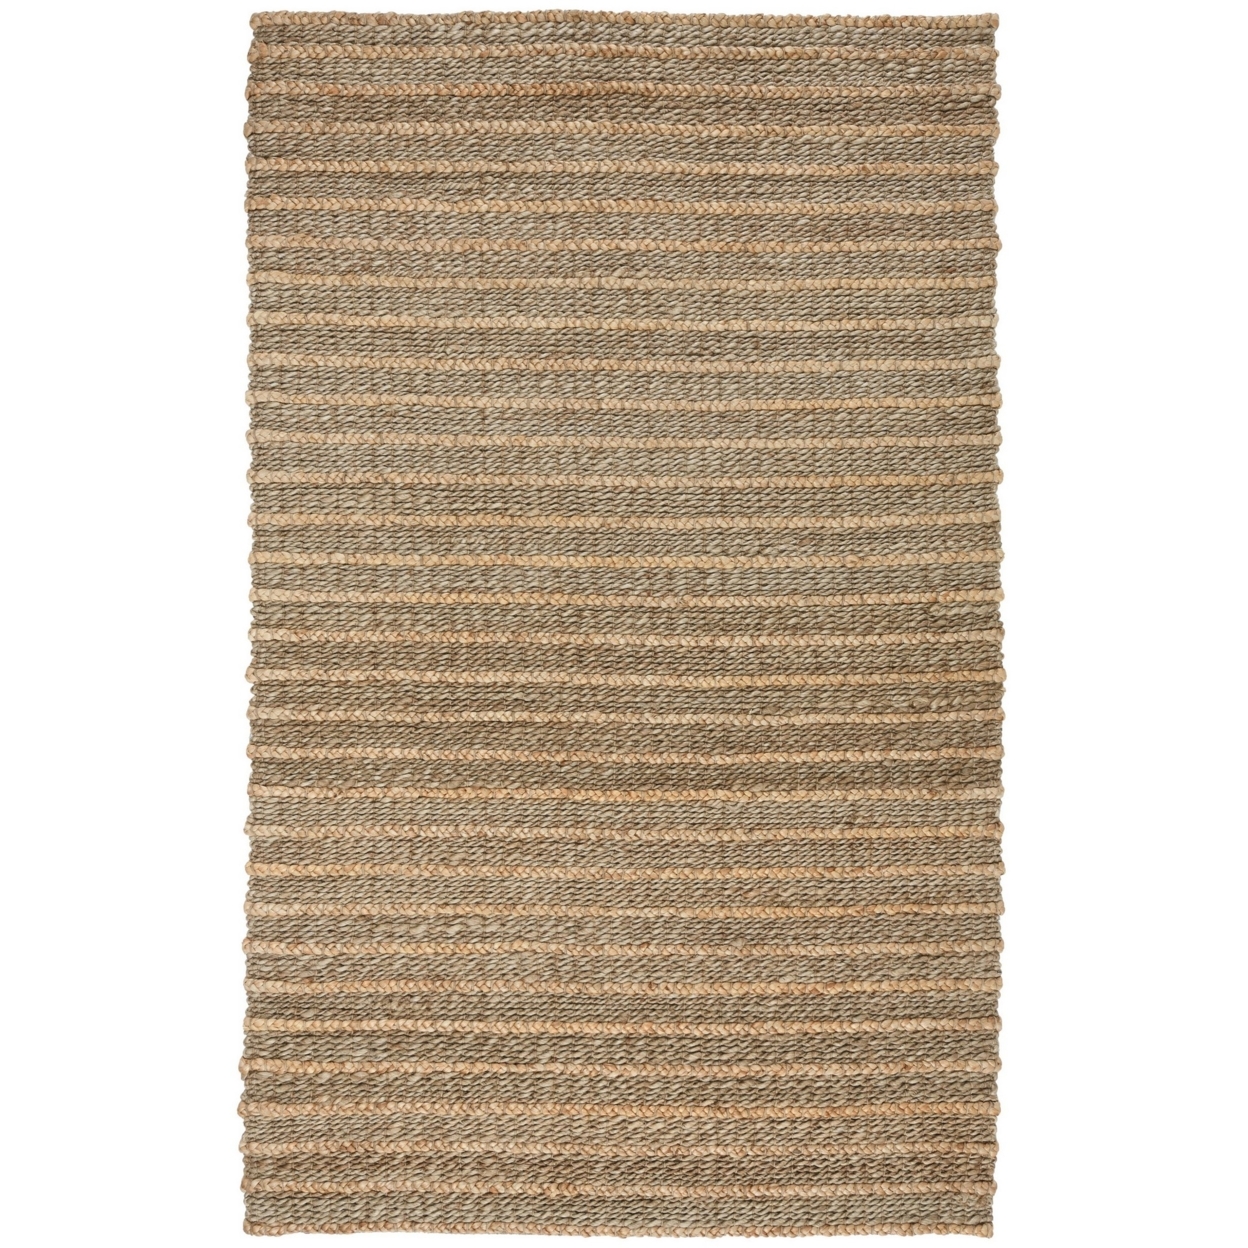 Josie 8 X 10 Area Rug, Handwoven Brown Jute, Braided And Coiled Stripes - Saltoro Sherpi